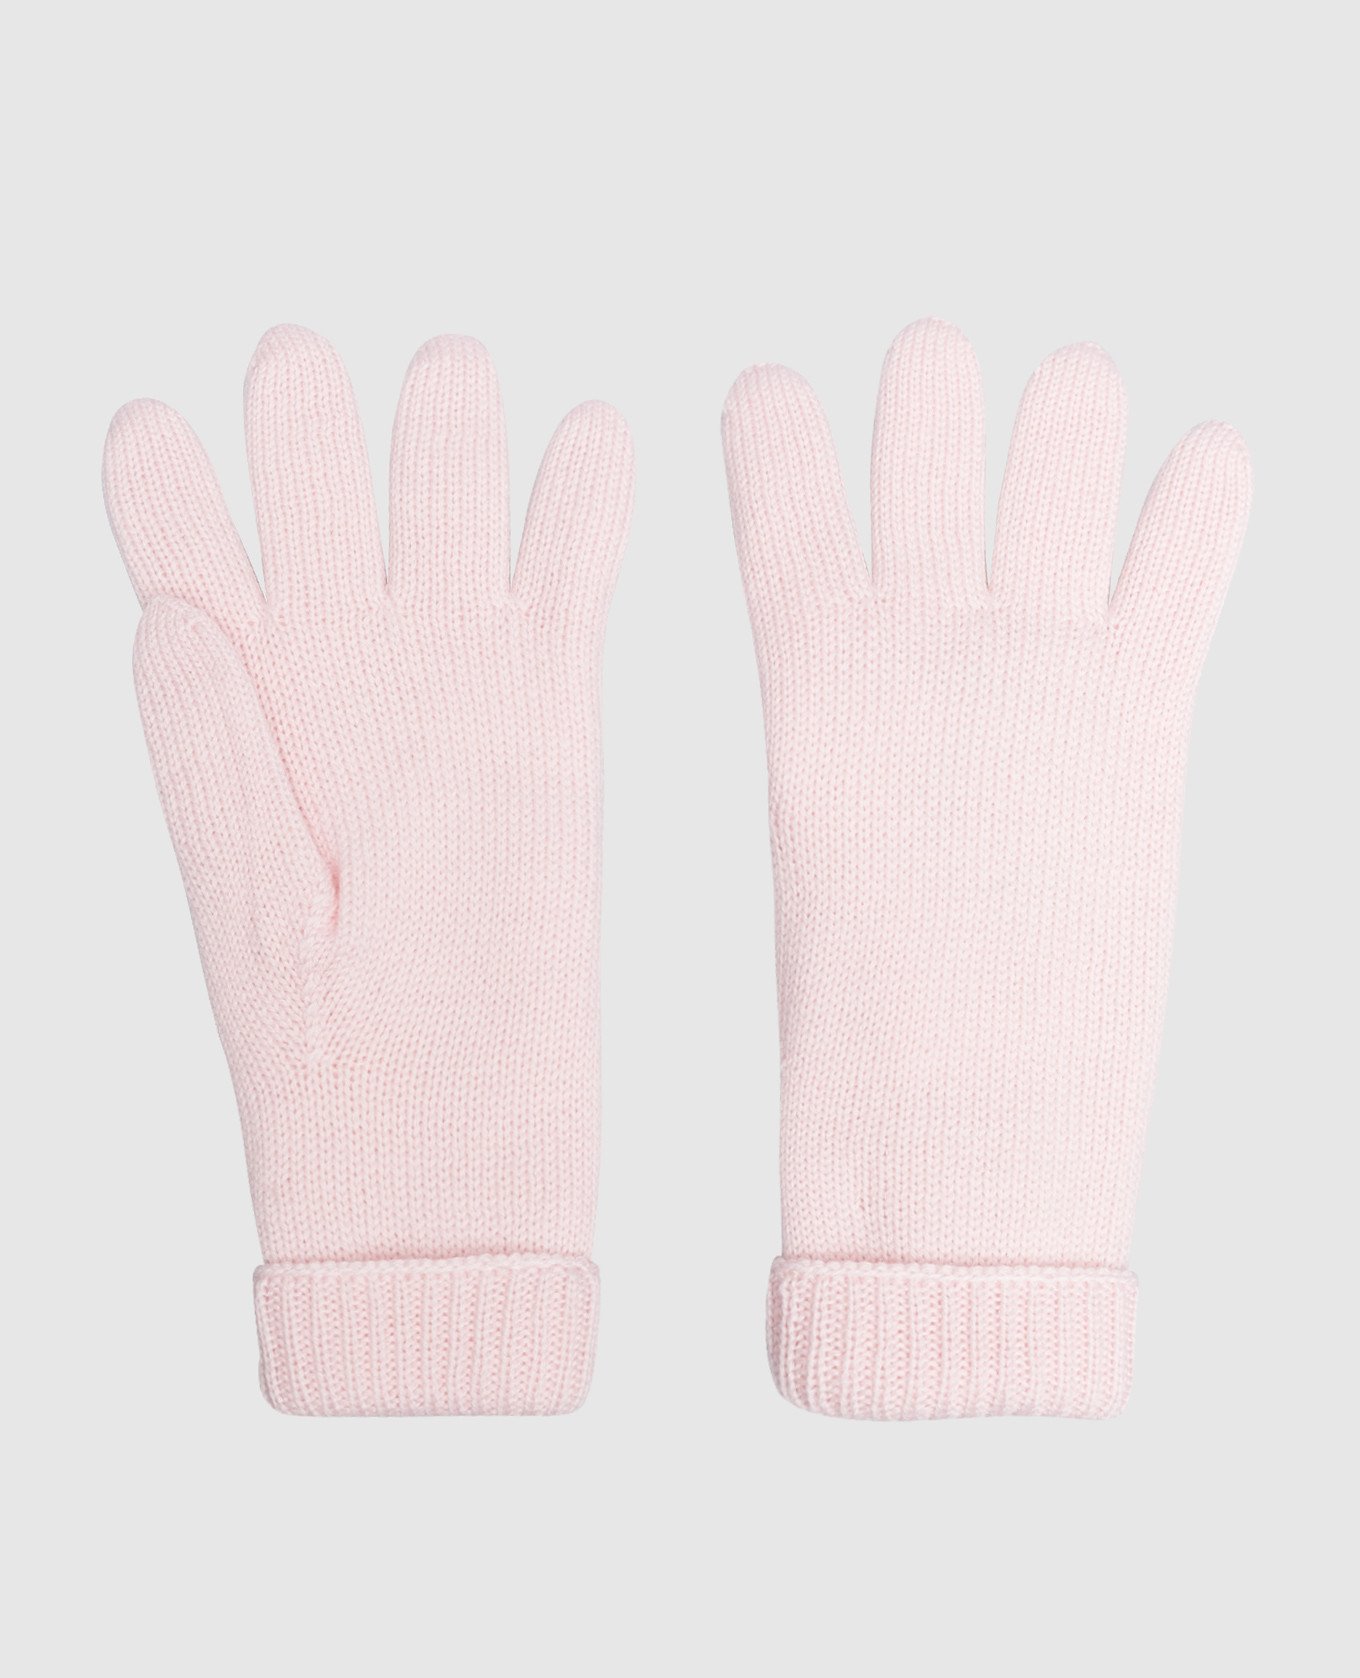 Children's pink mittens made of wool